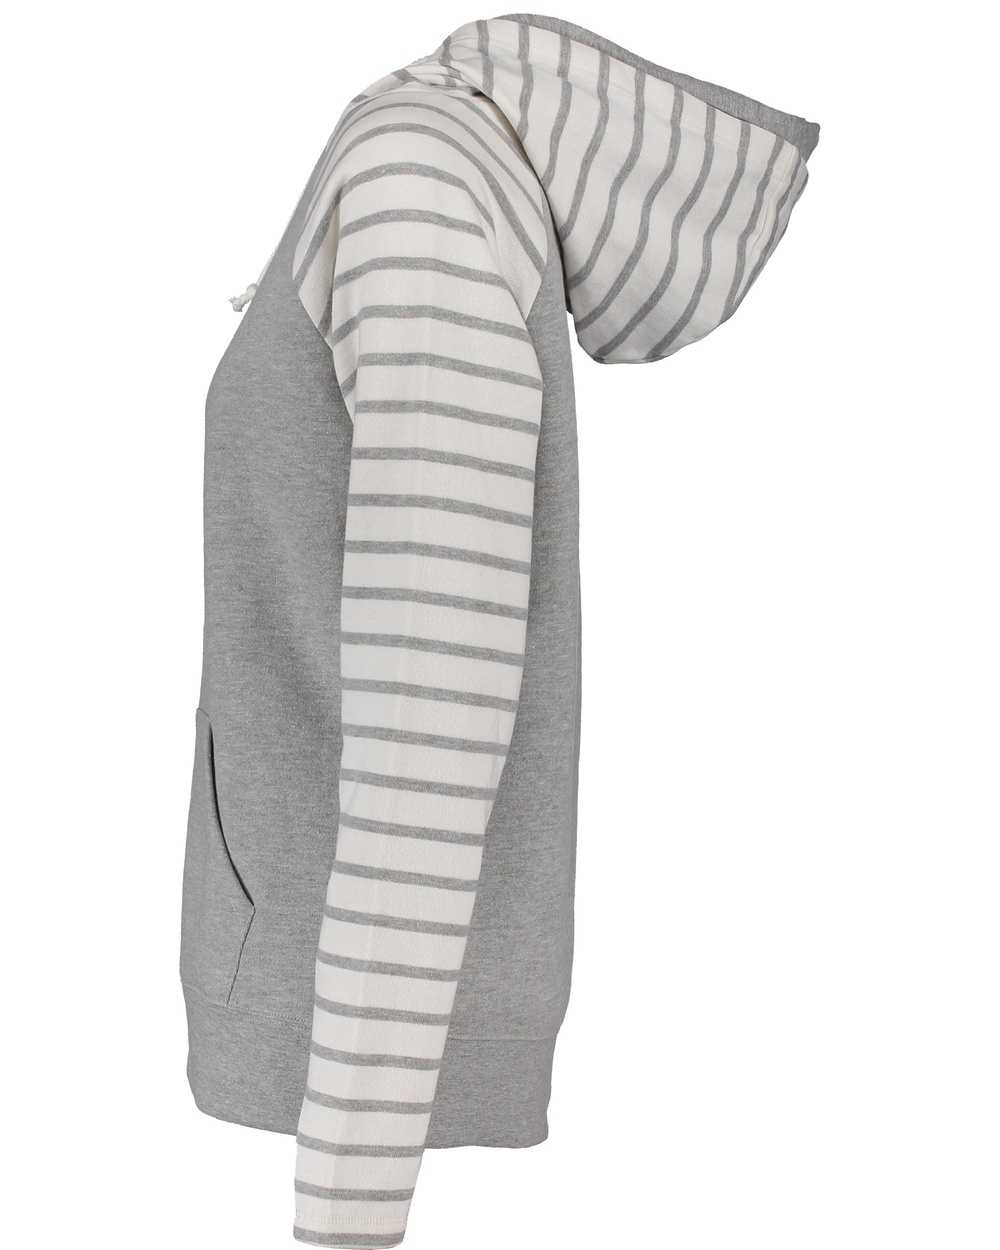 EZ383 - Ladies Stripe Double Hood Pullover - One Stop